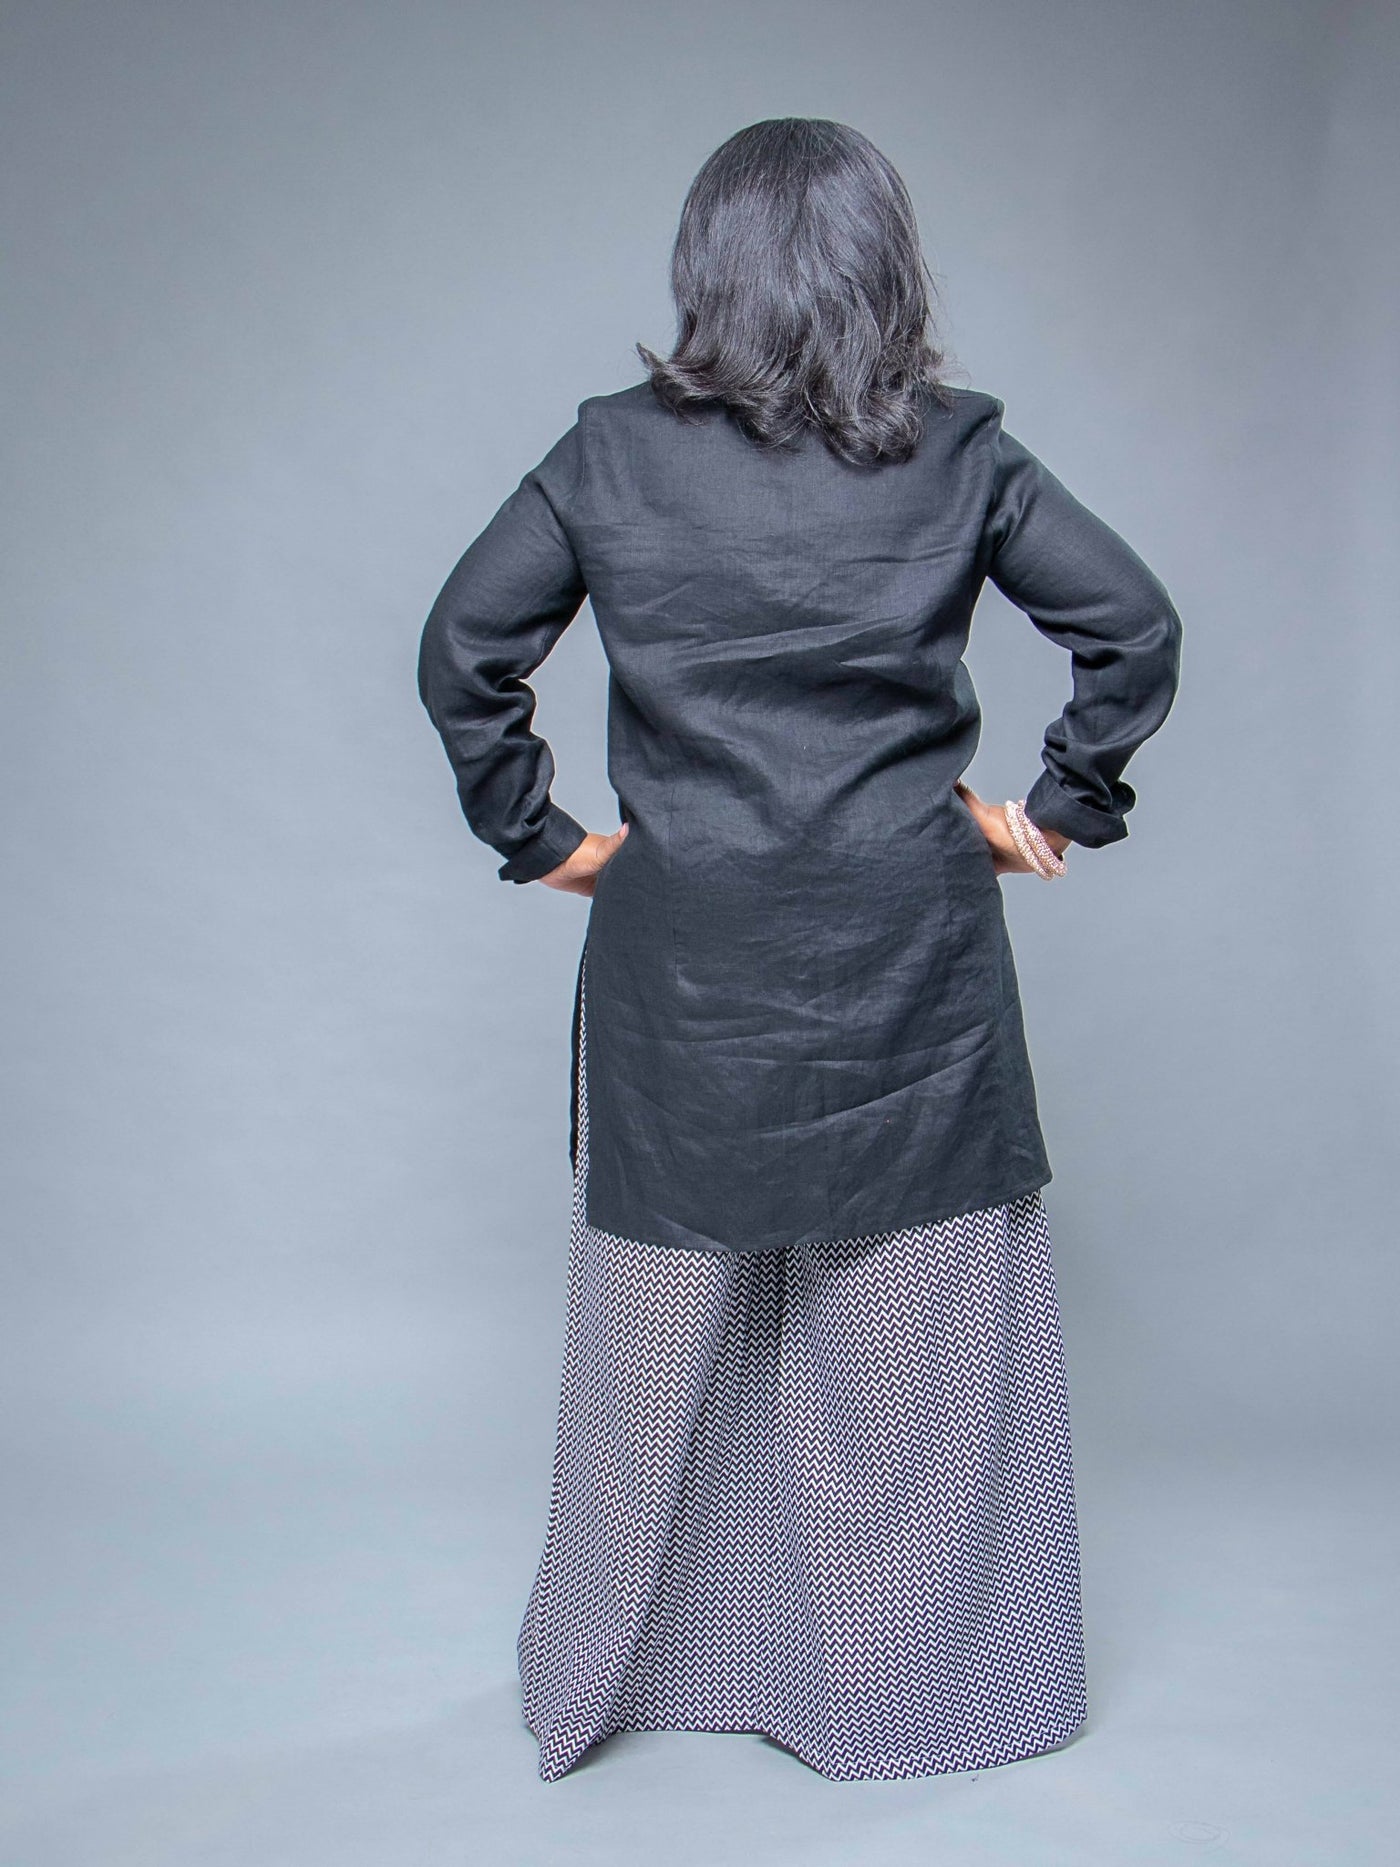 Sally Karago Linen Shirt Dress - Black / Grey - Shop Zetu Kenya